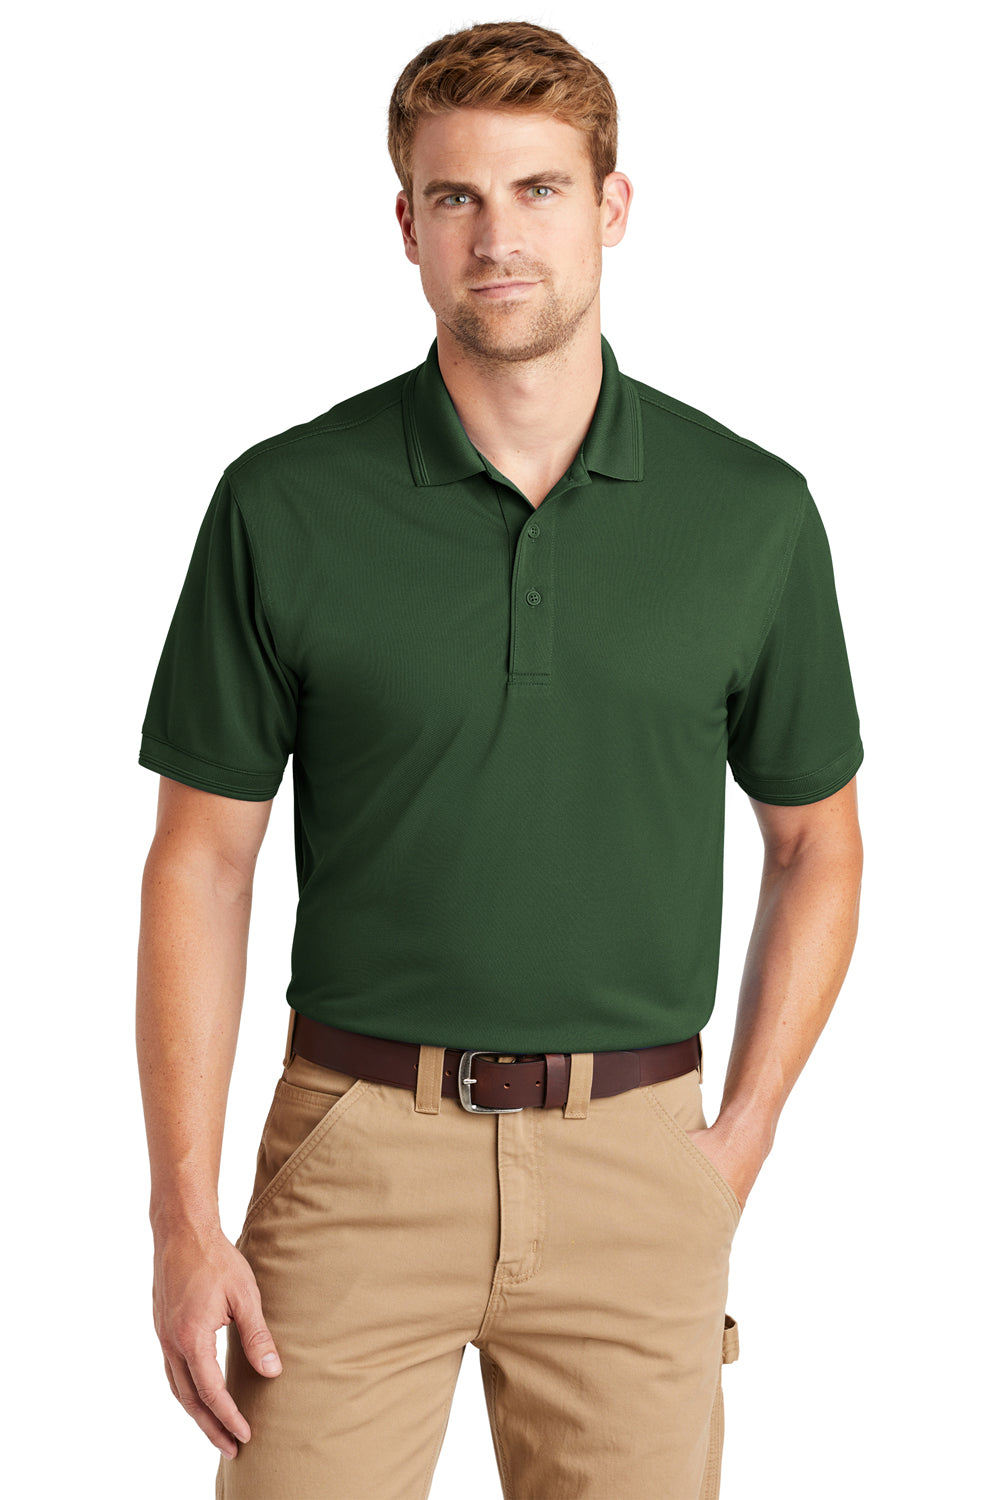 CornerStone CS4020 Mens Industrial Moisture Wicking Short Sleeve Polo Shirt Dark Green Front